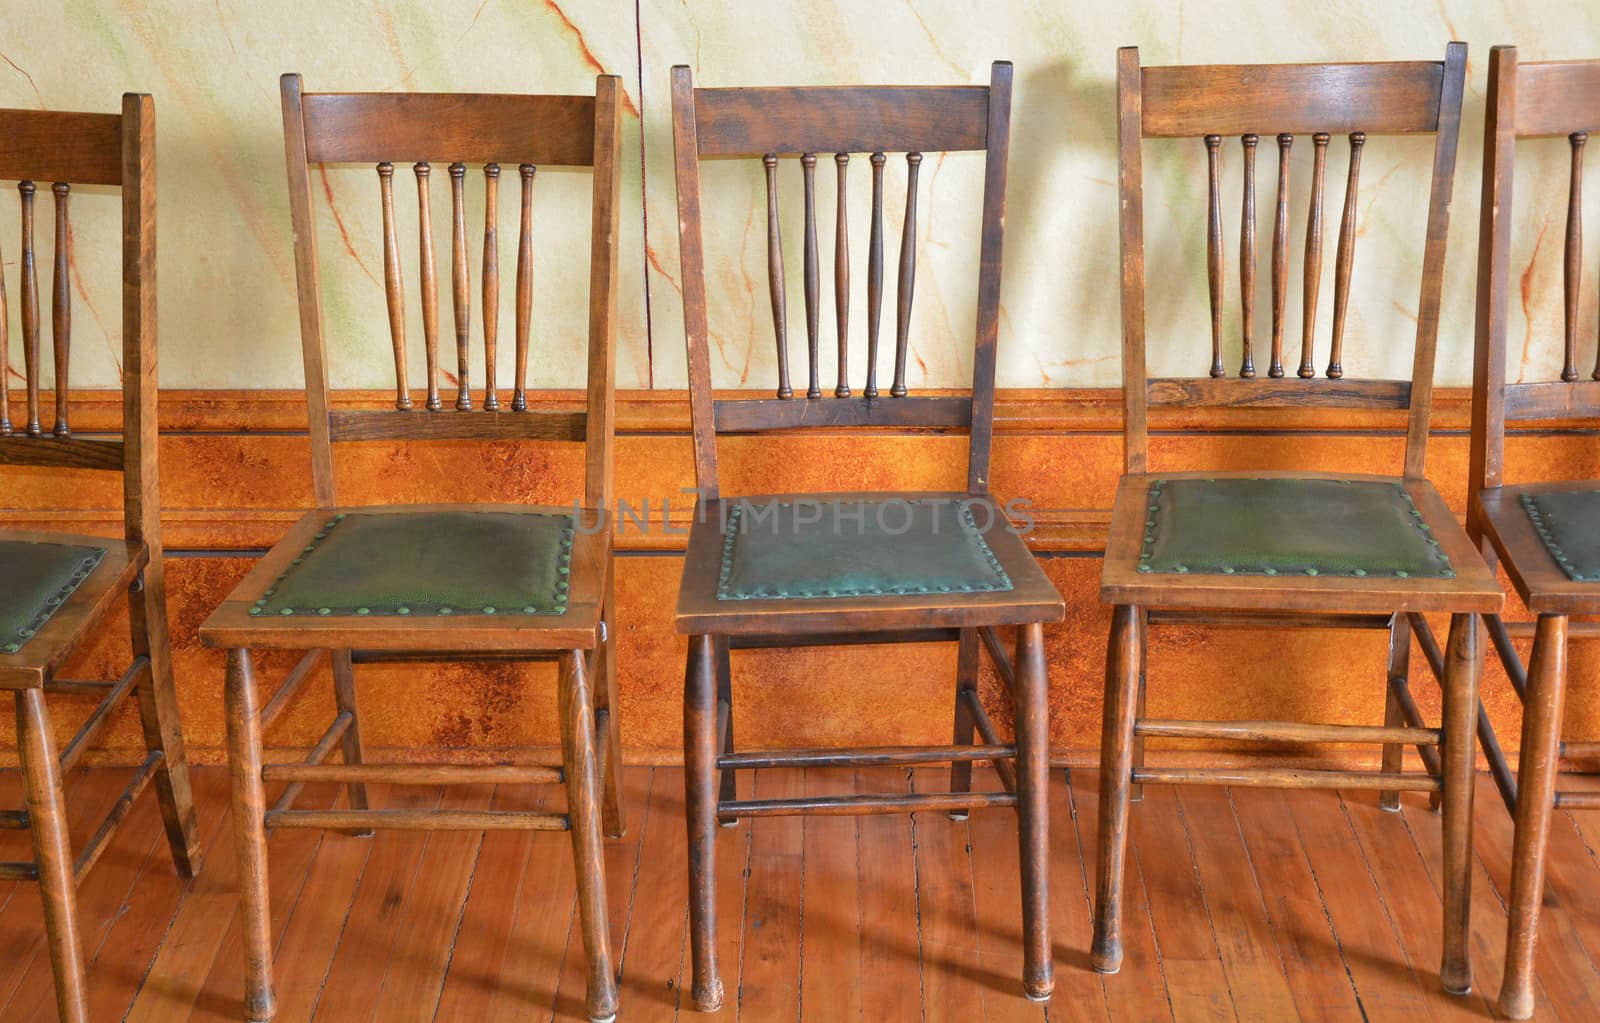 Old wooden chairs on hardwood floor